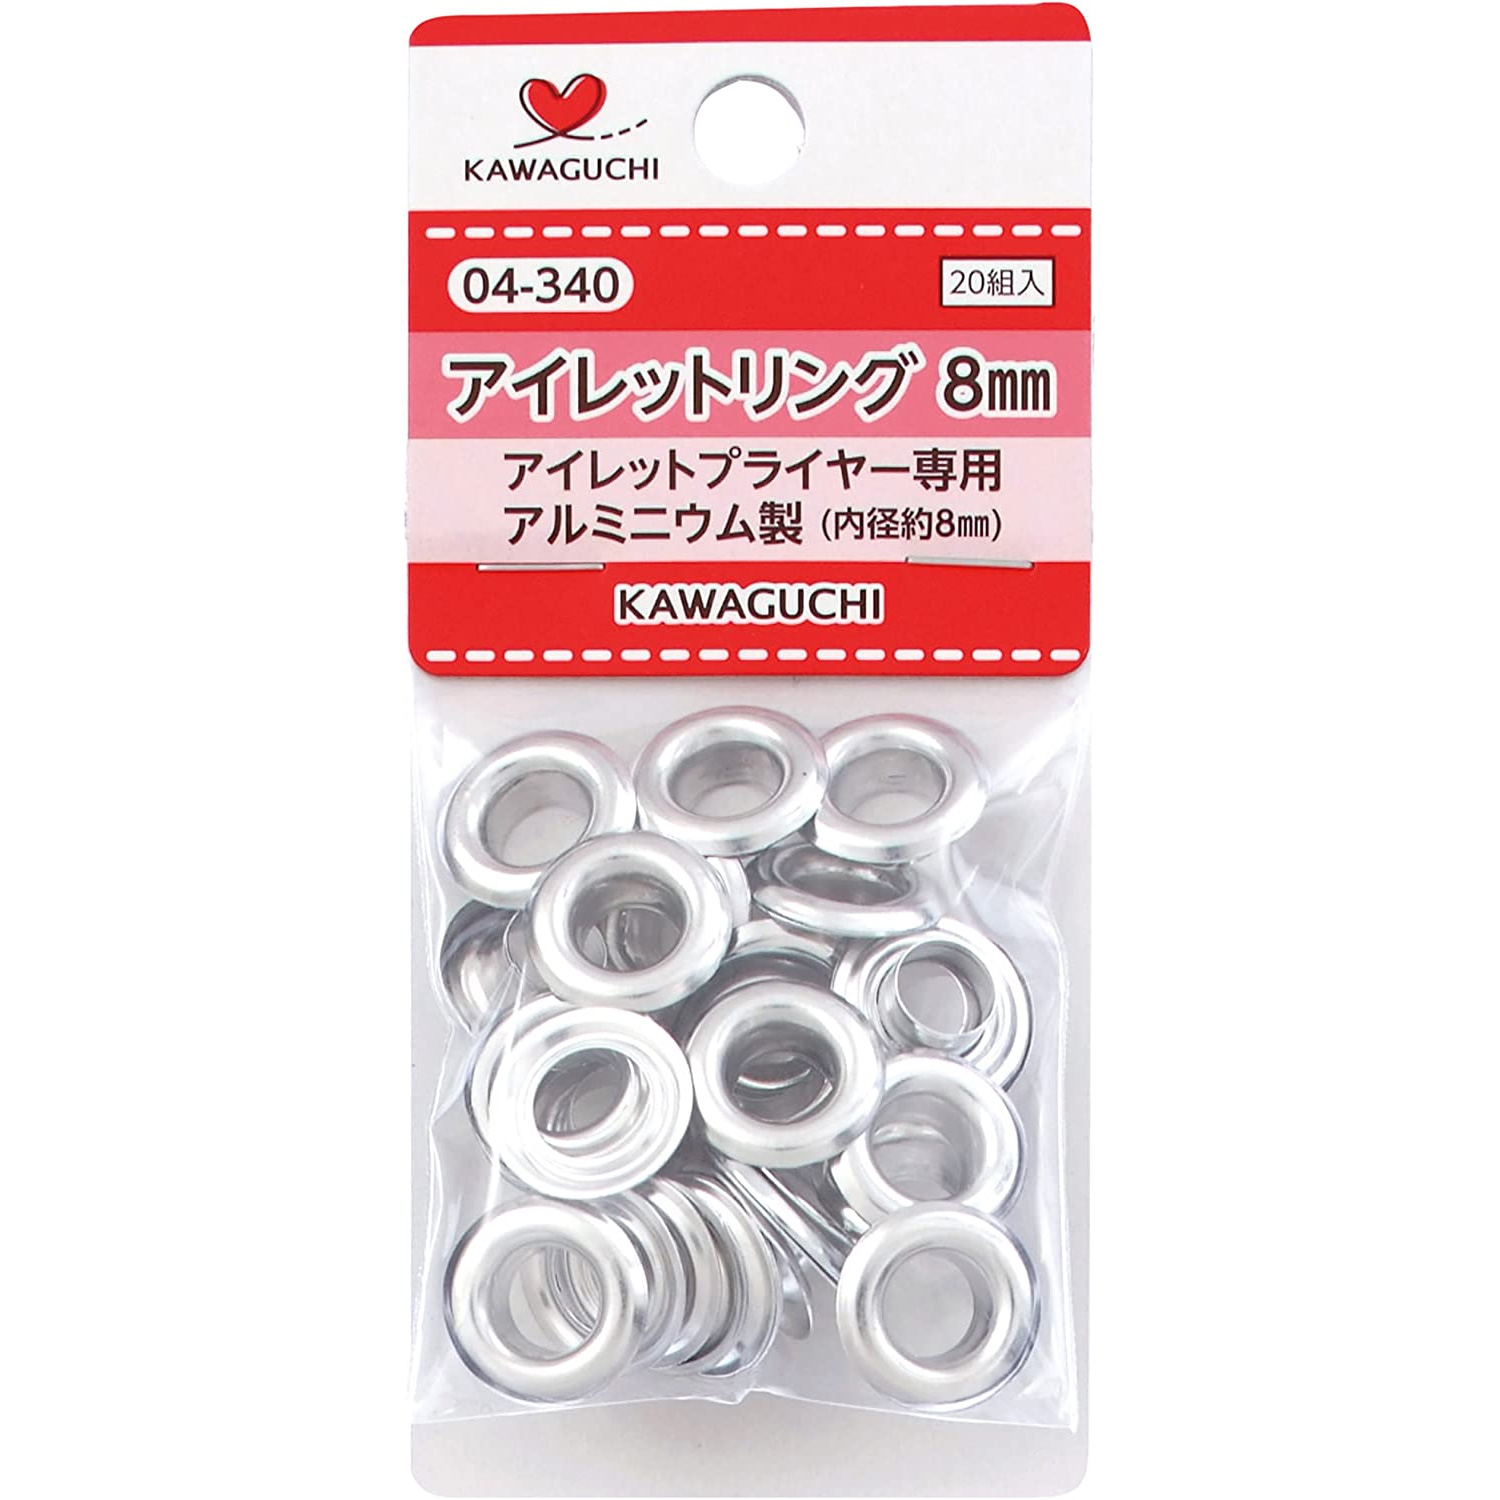 TK04340　Eyelet Rings 8mm (bag)